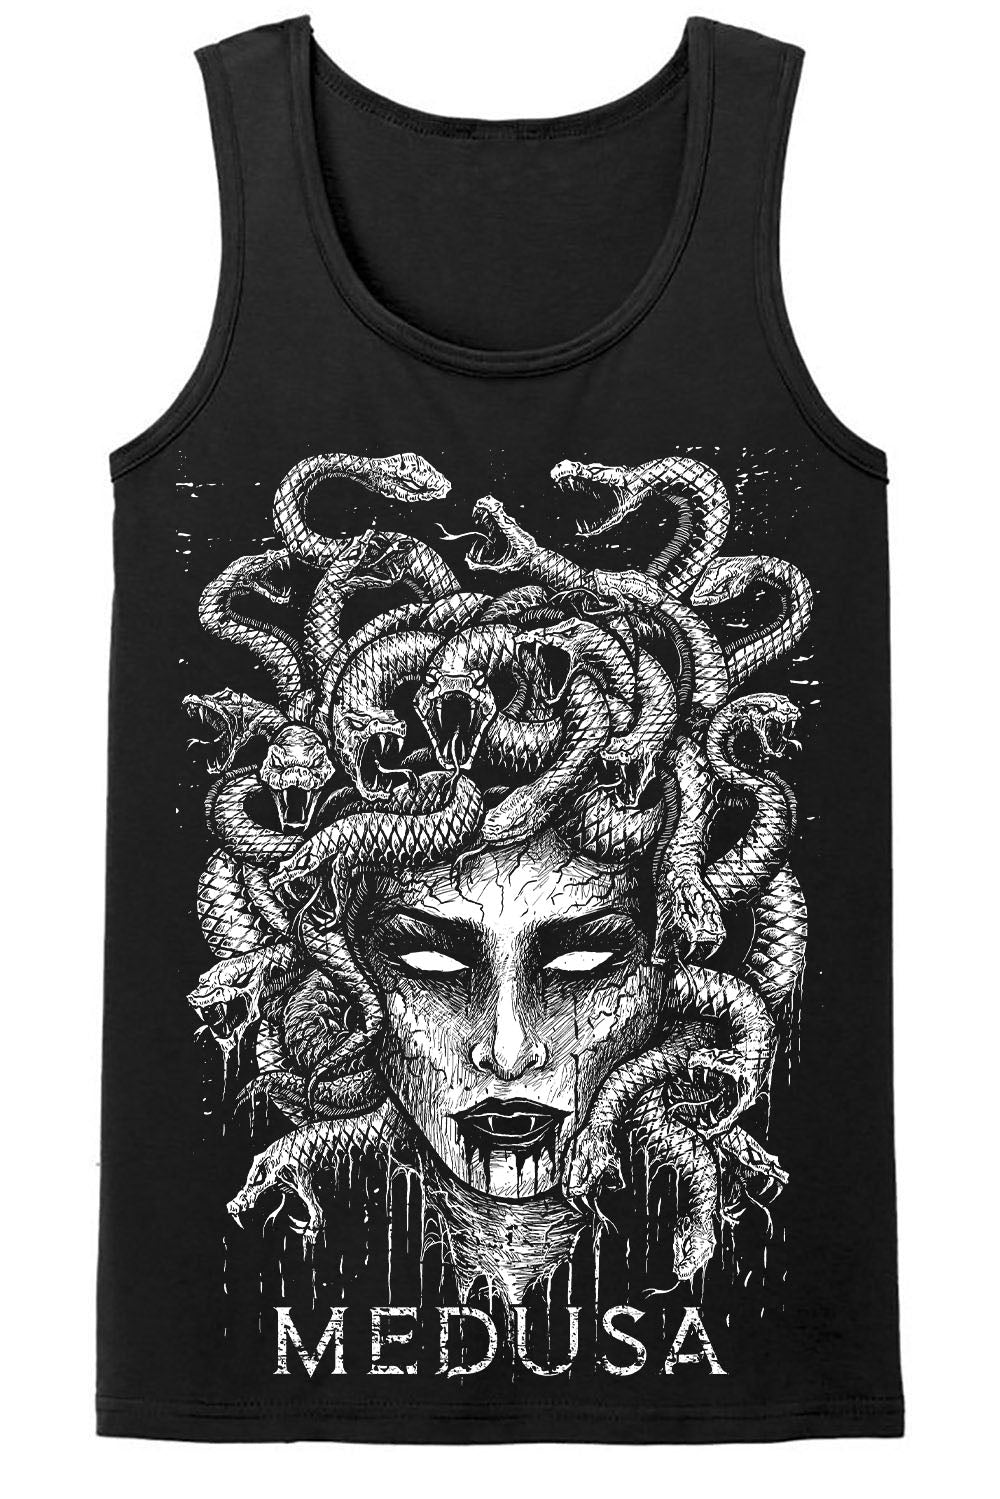 Medusa T-shirt